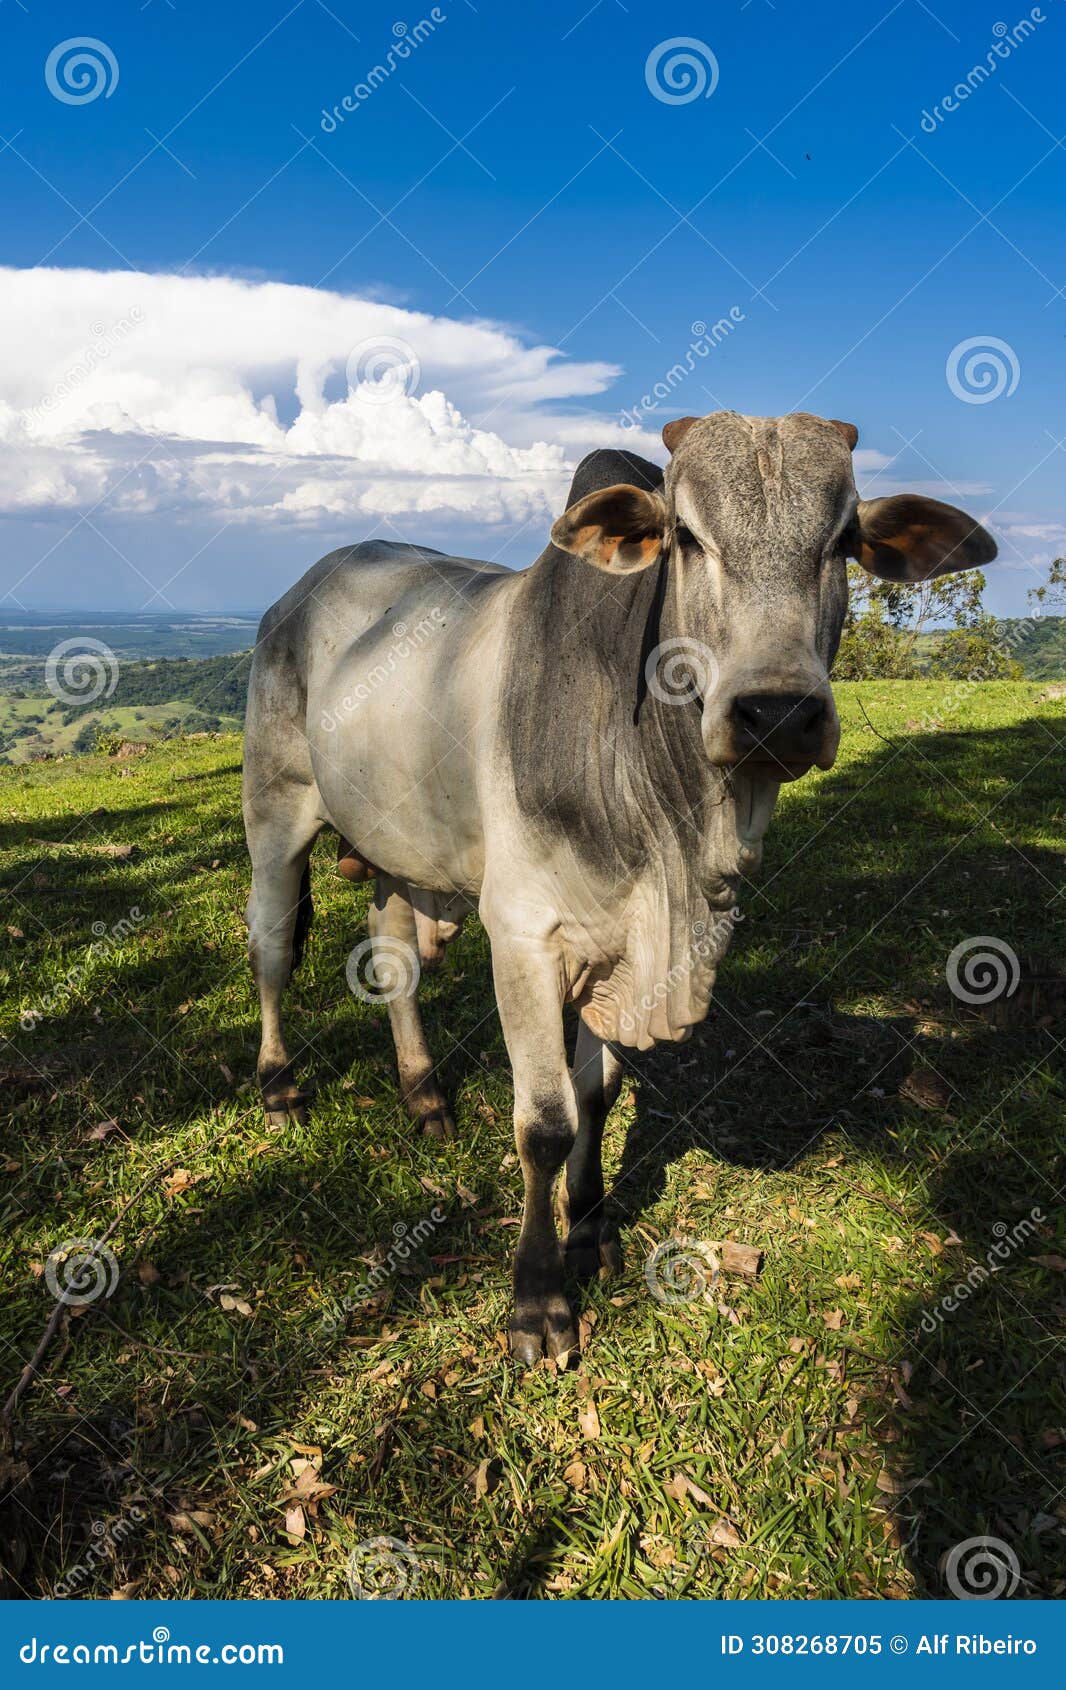 zebu nellore bull in the pasture area of a beef cattle farm